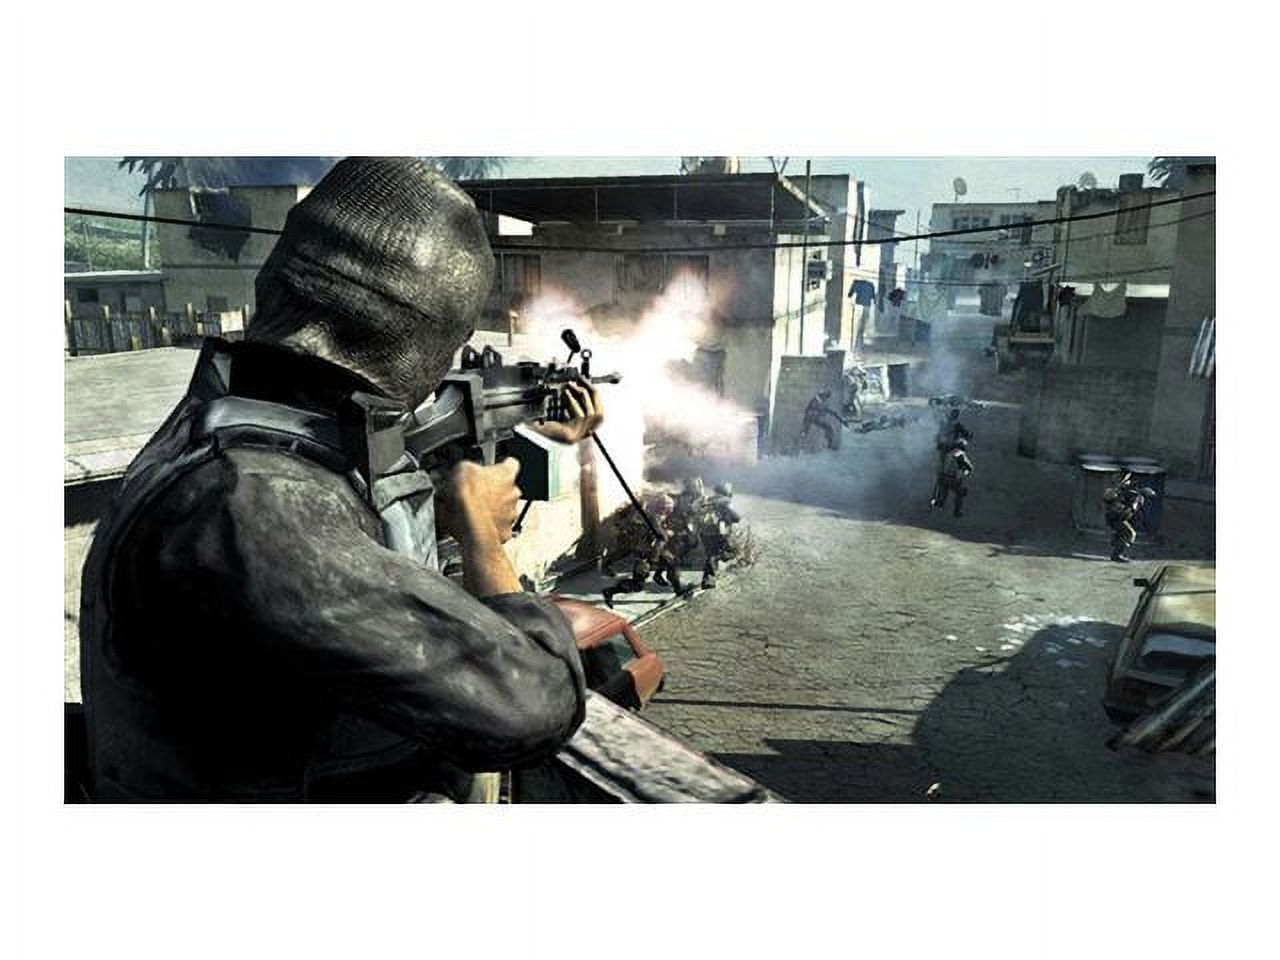 Call of Duty 4: Modern Warfare, Activision, PlayStation 3, 047875840591 - image 4 of 5